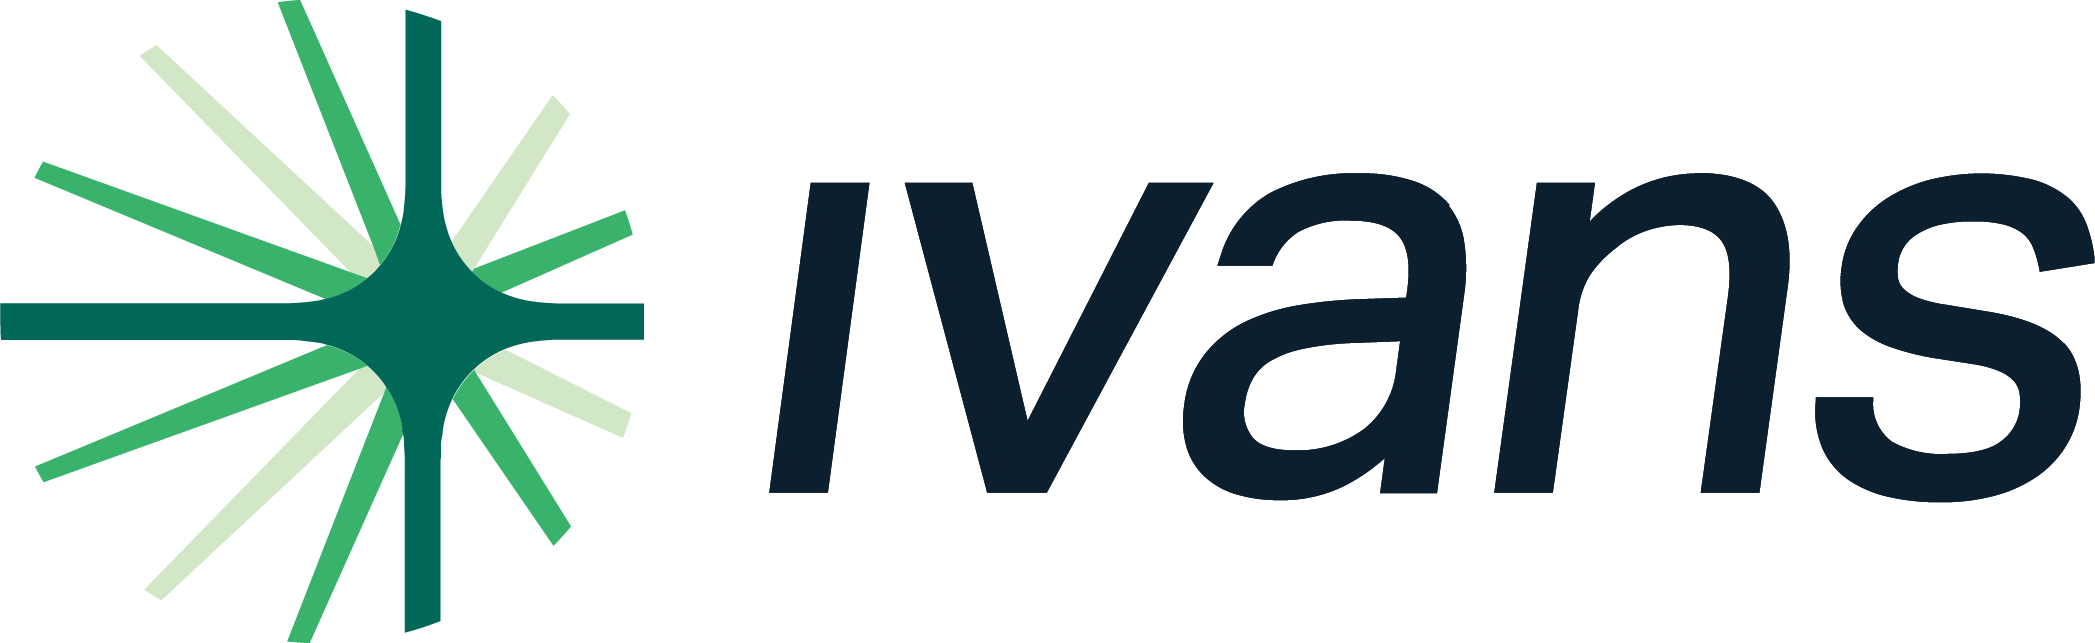 Ivans logo